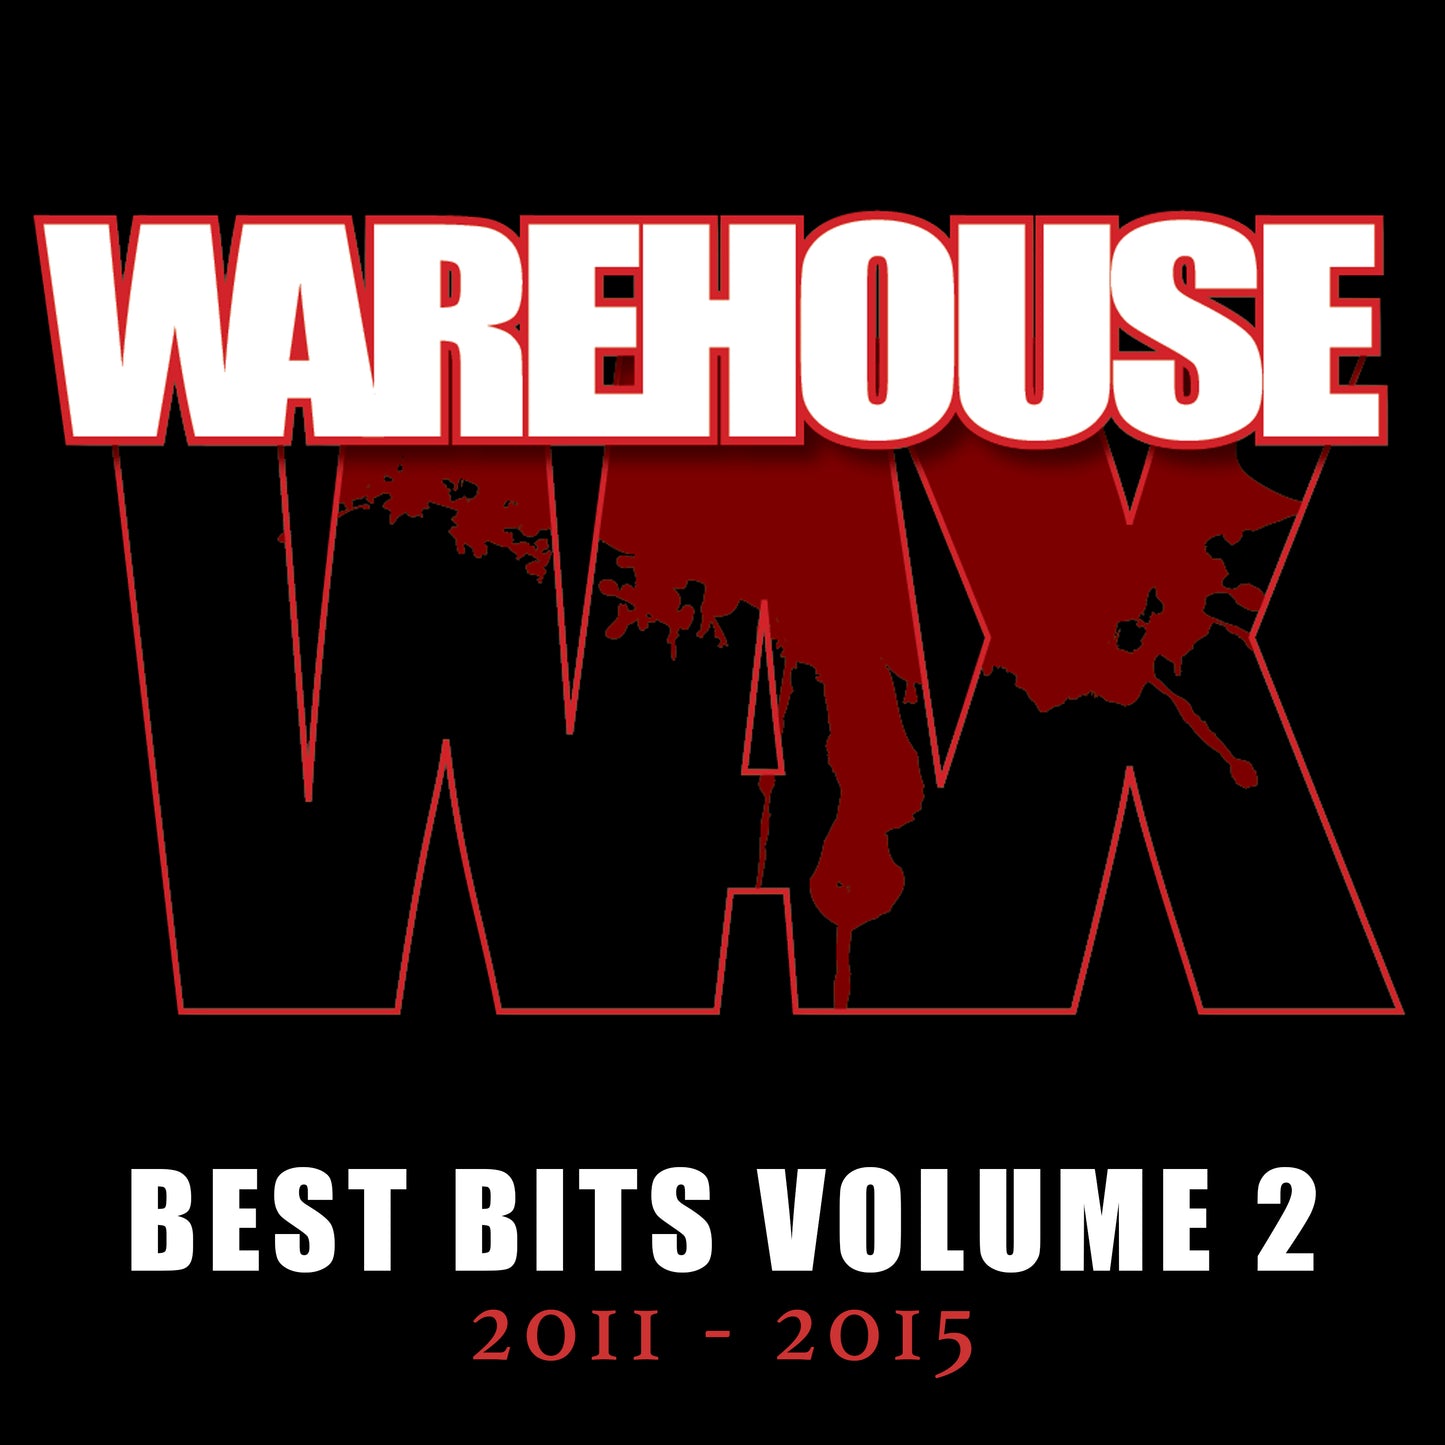 Warehouse Wax - Best Bits Volume 2 (2011 - 2015) - 320k mp3 download.